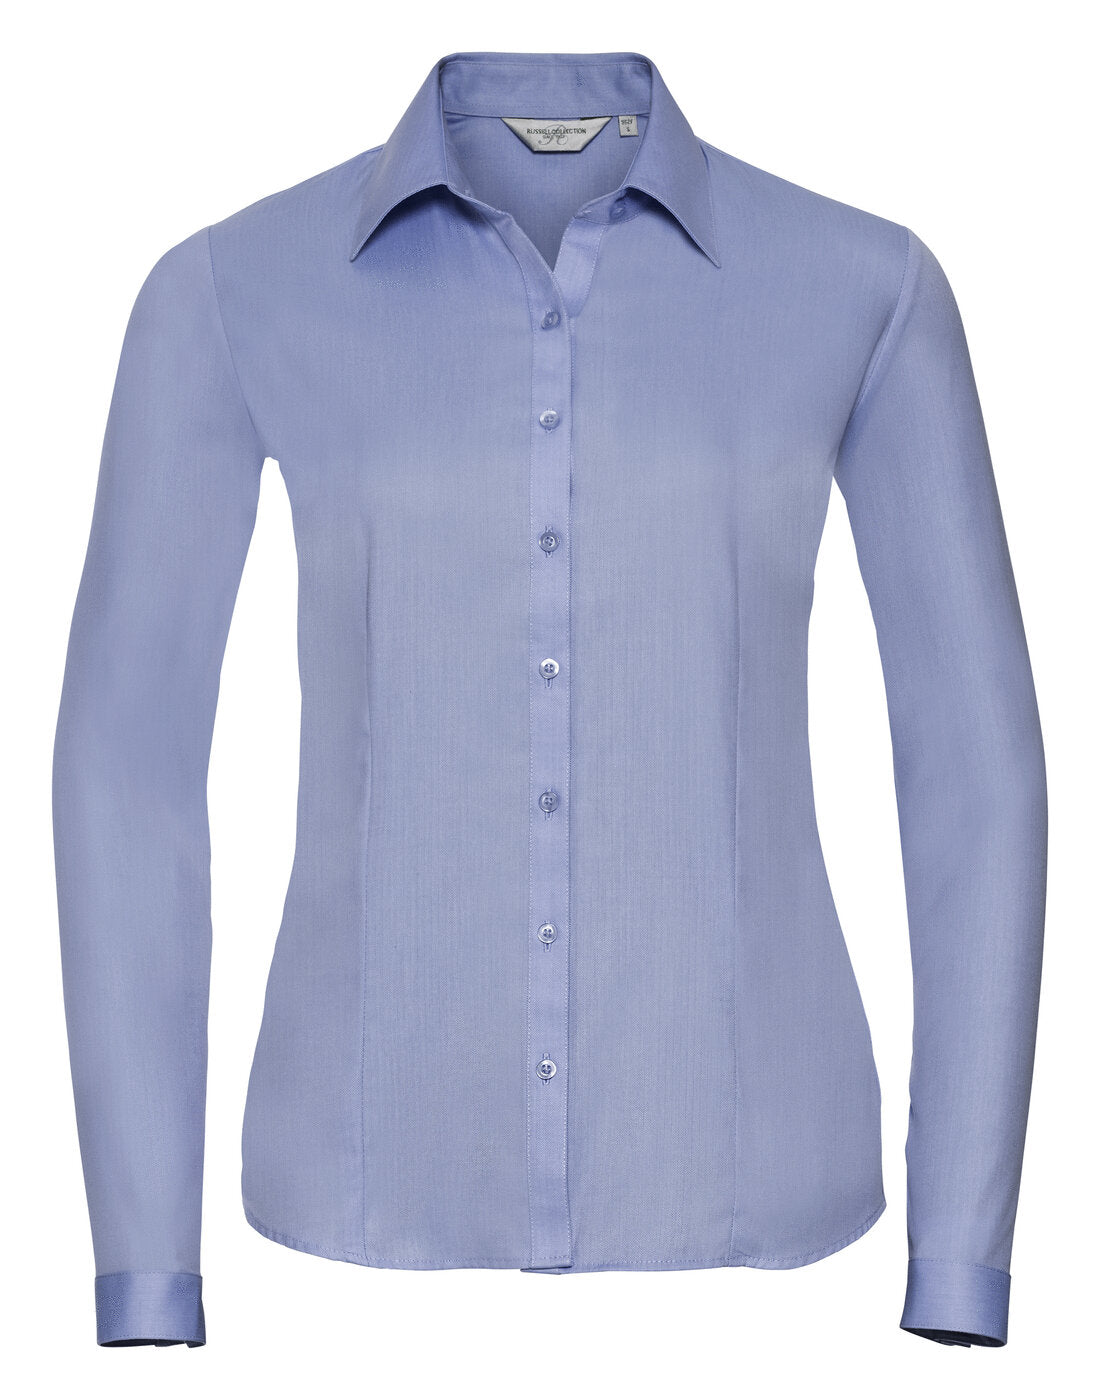 Russell Ladies Long Sleeve Herringbone Shirt Light Blue